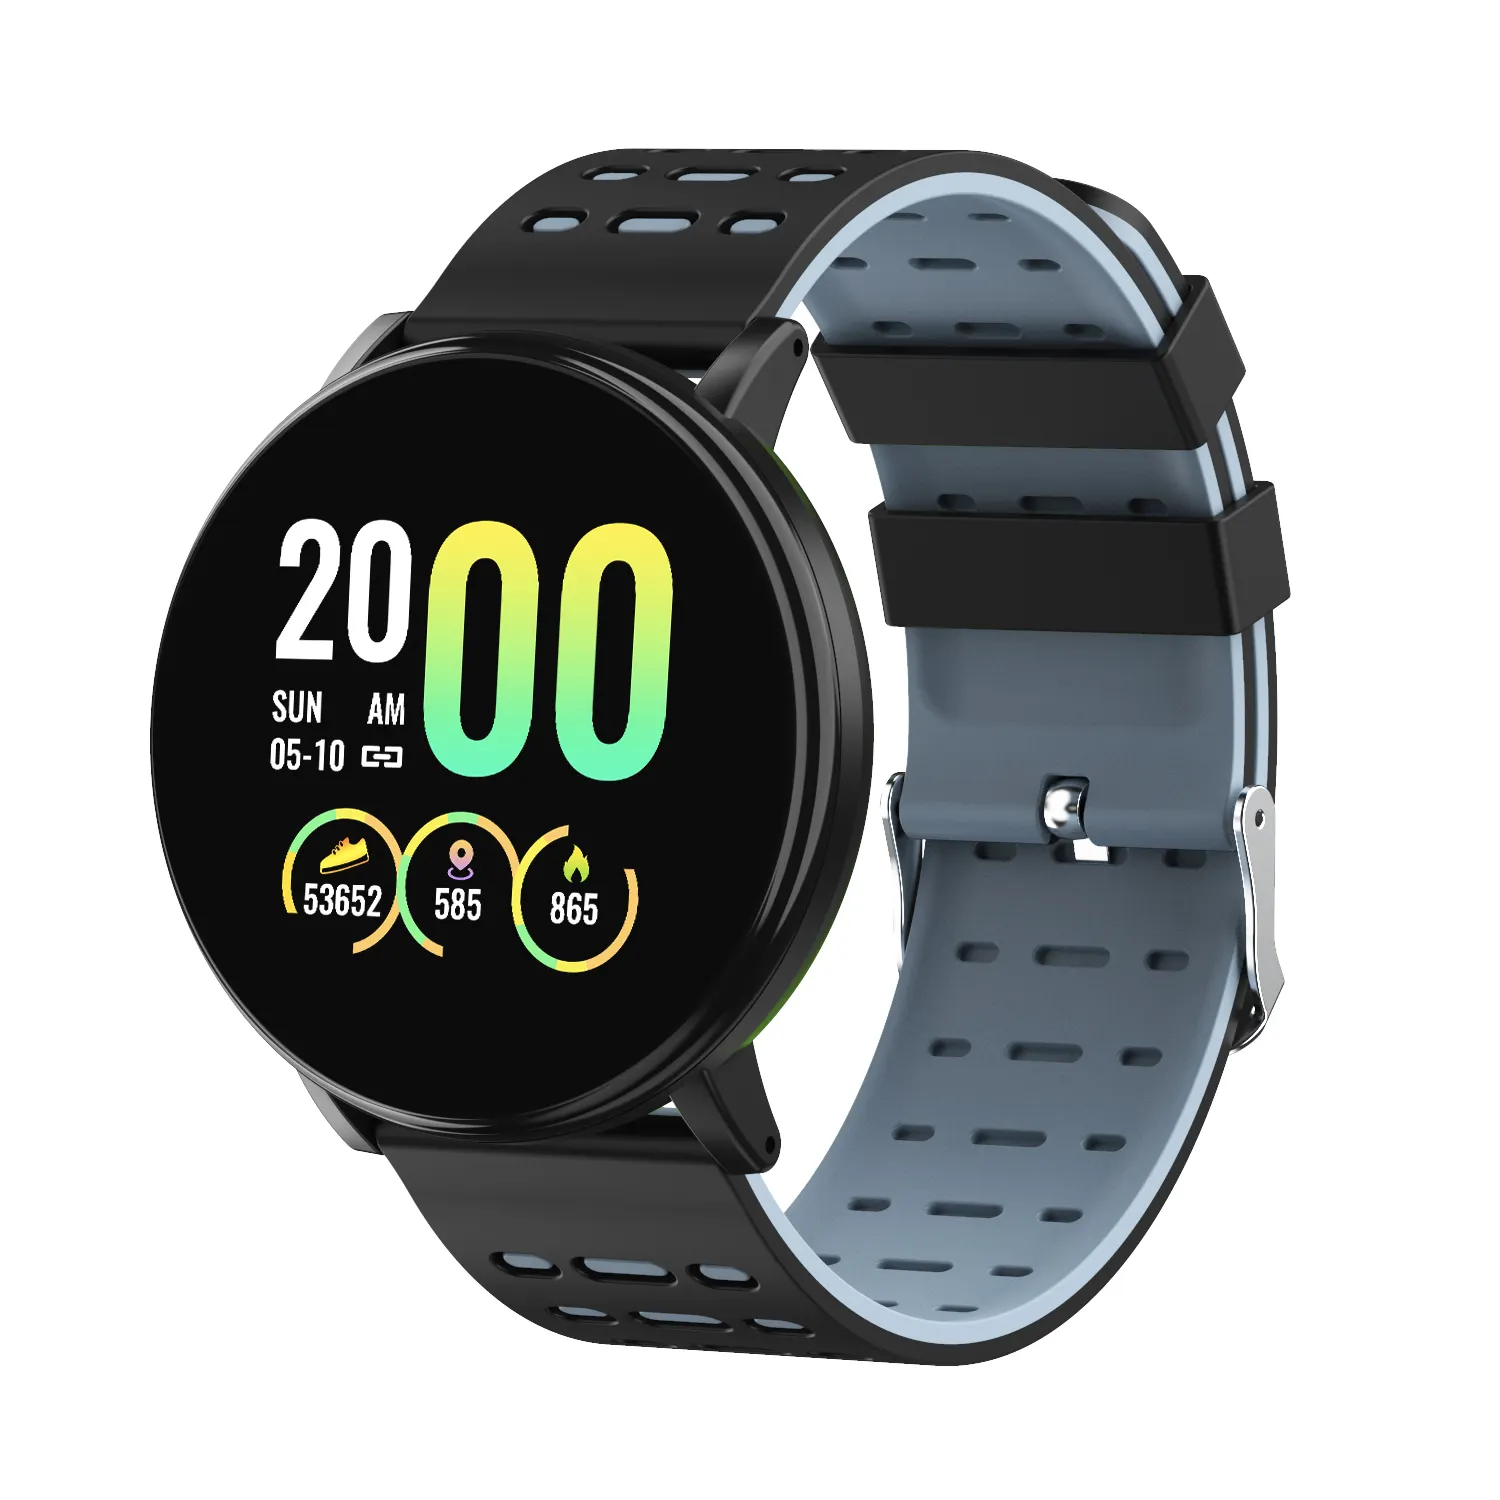 119Plus 2020 BT умные часы для мужчин, умные часы для измерения артериального давления, женские часы, спортивные часы, трекер WhatsApp для Android Ios